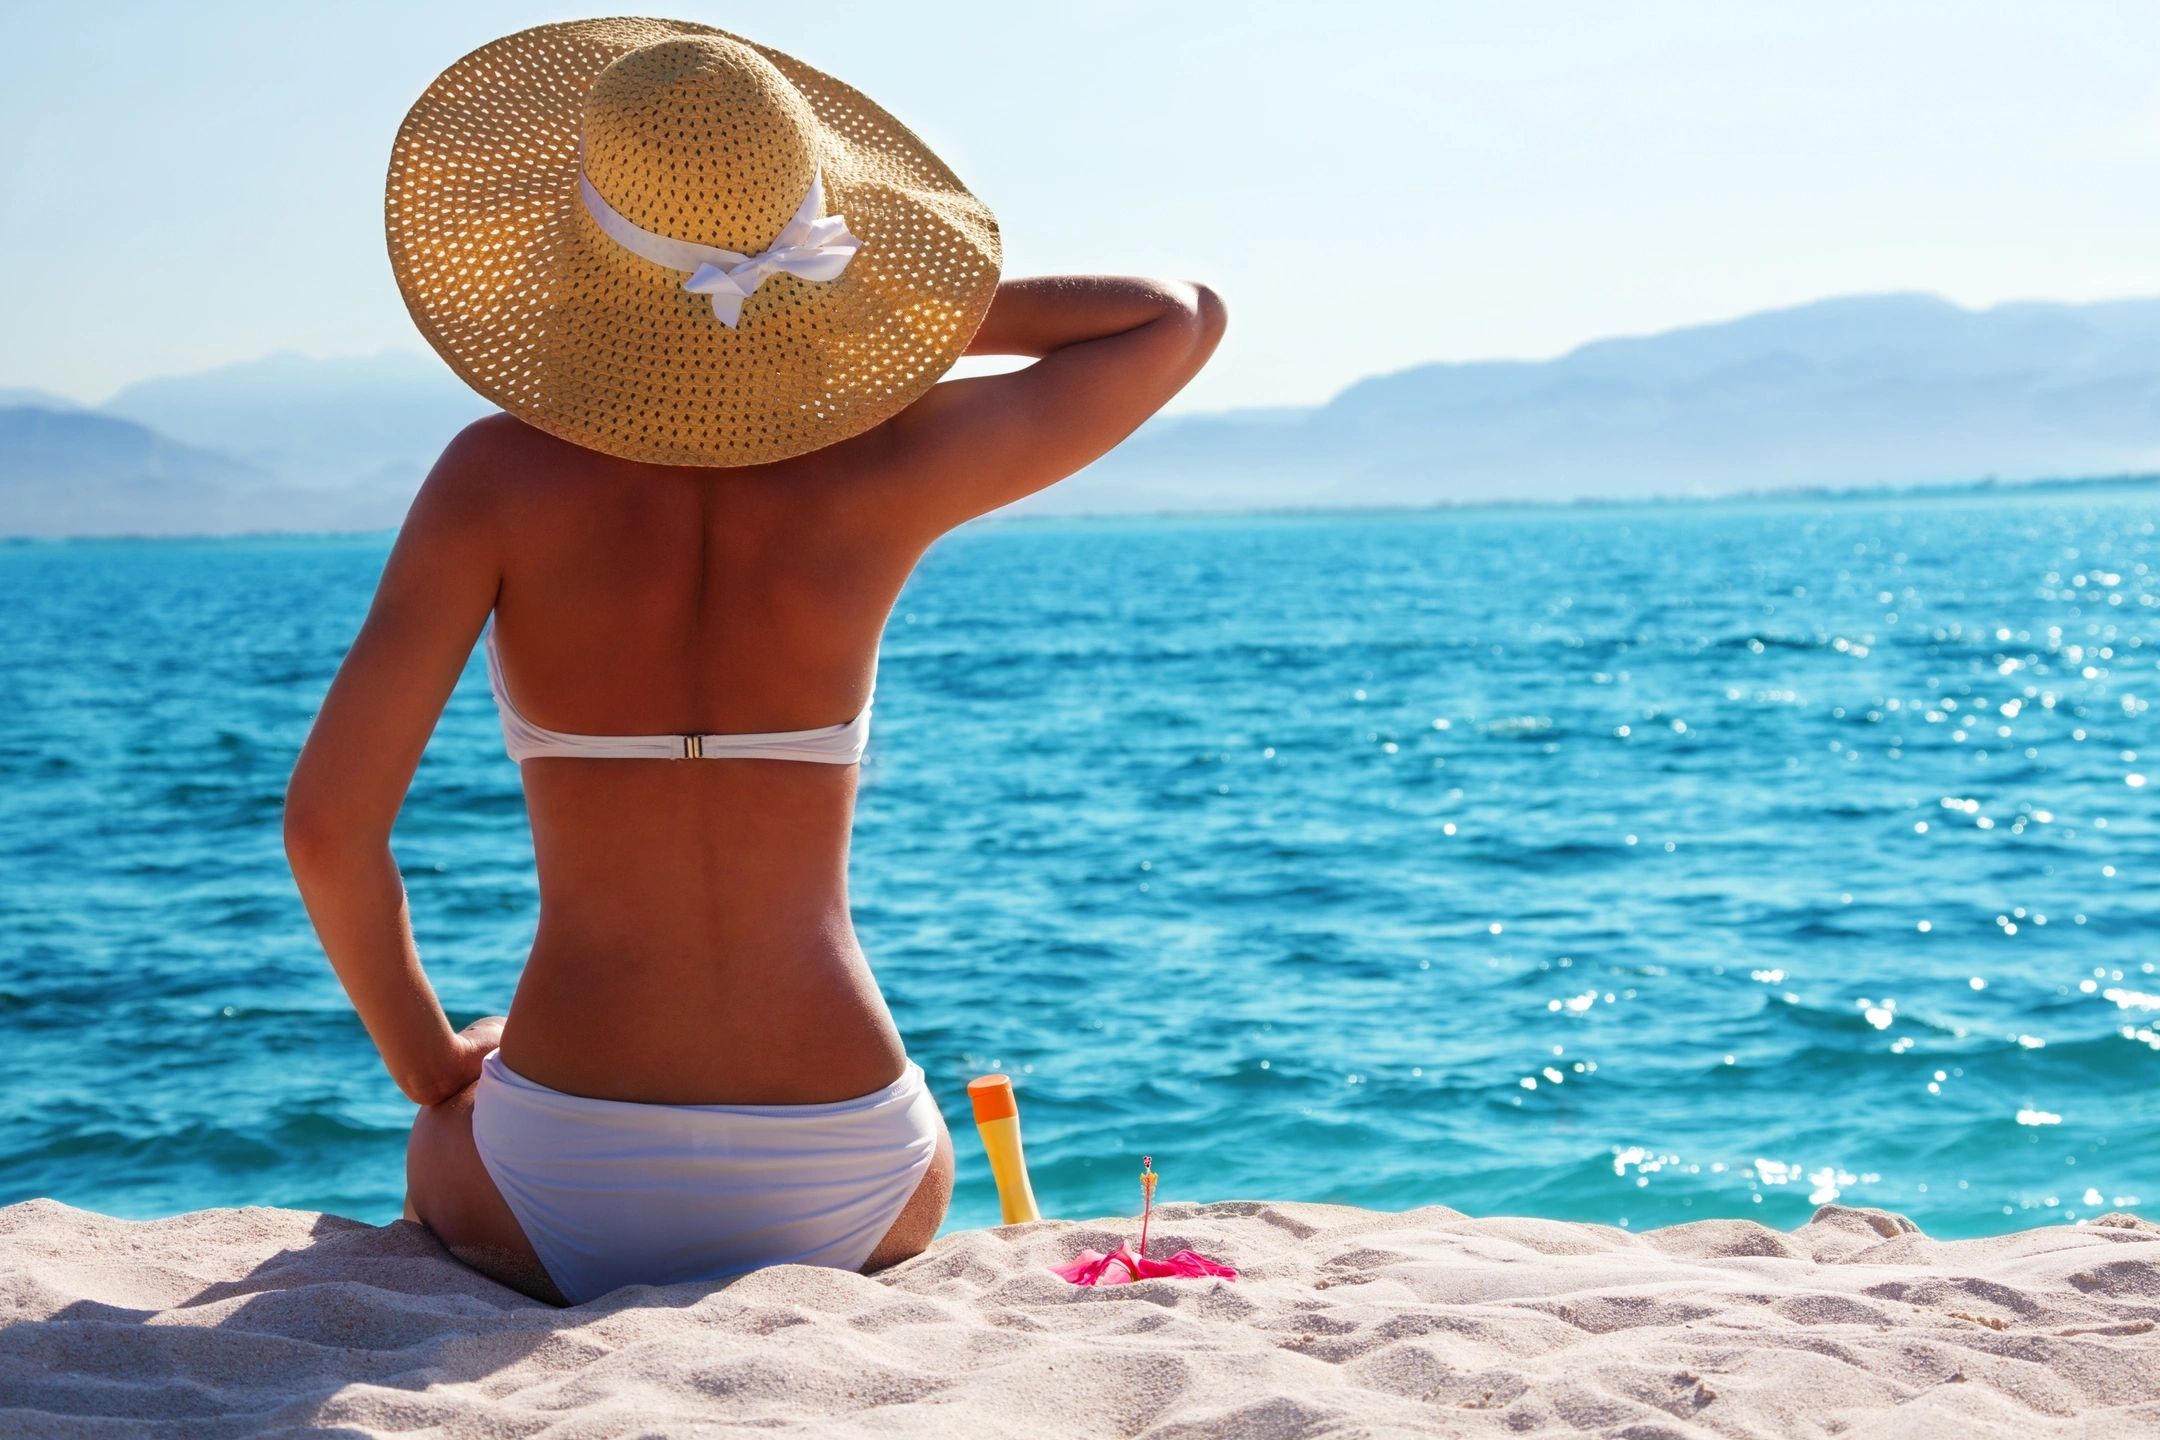 pnina luxe hair removal can help with bikini area